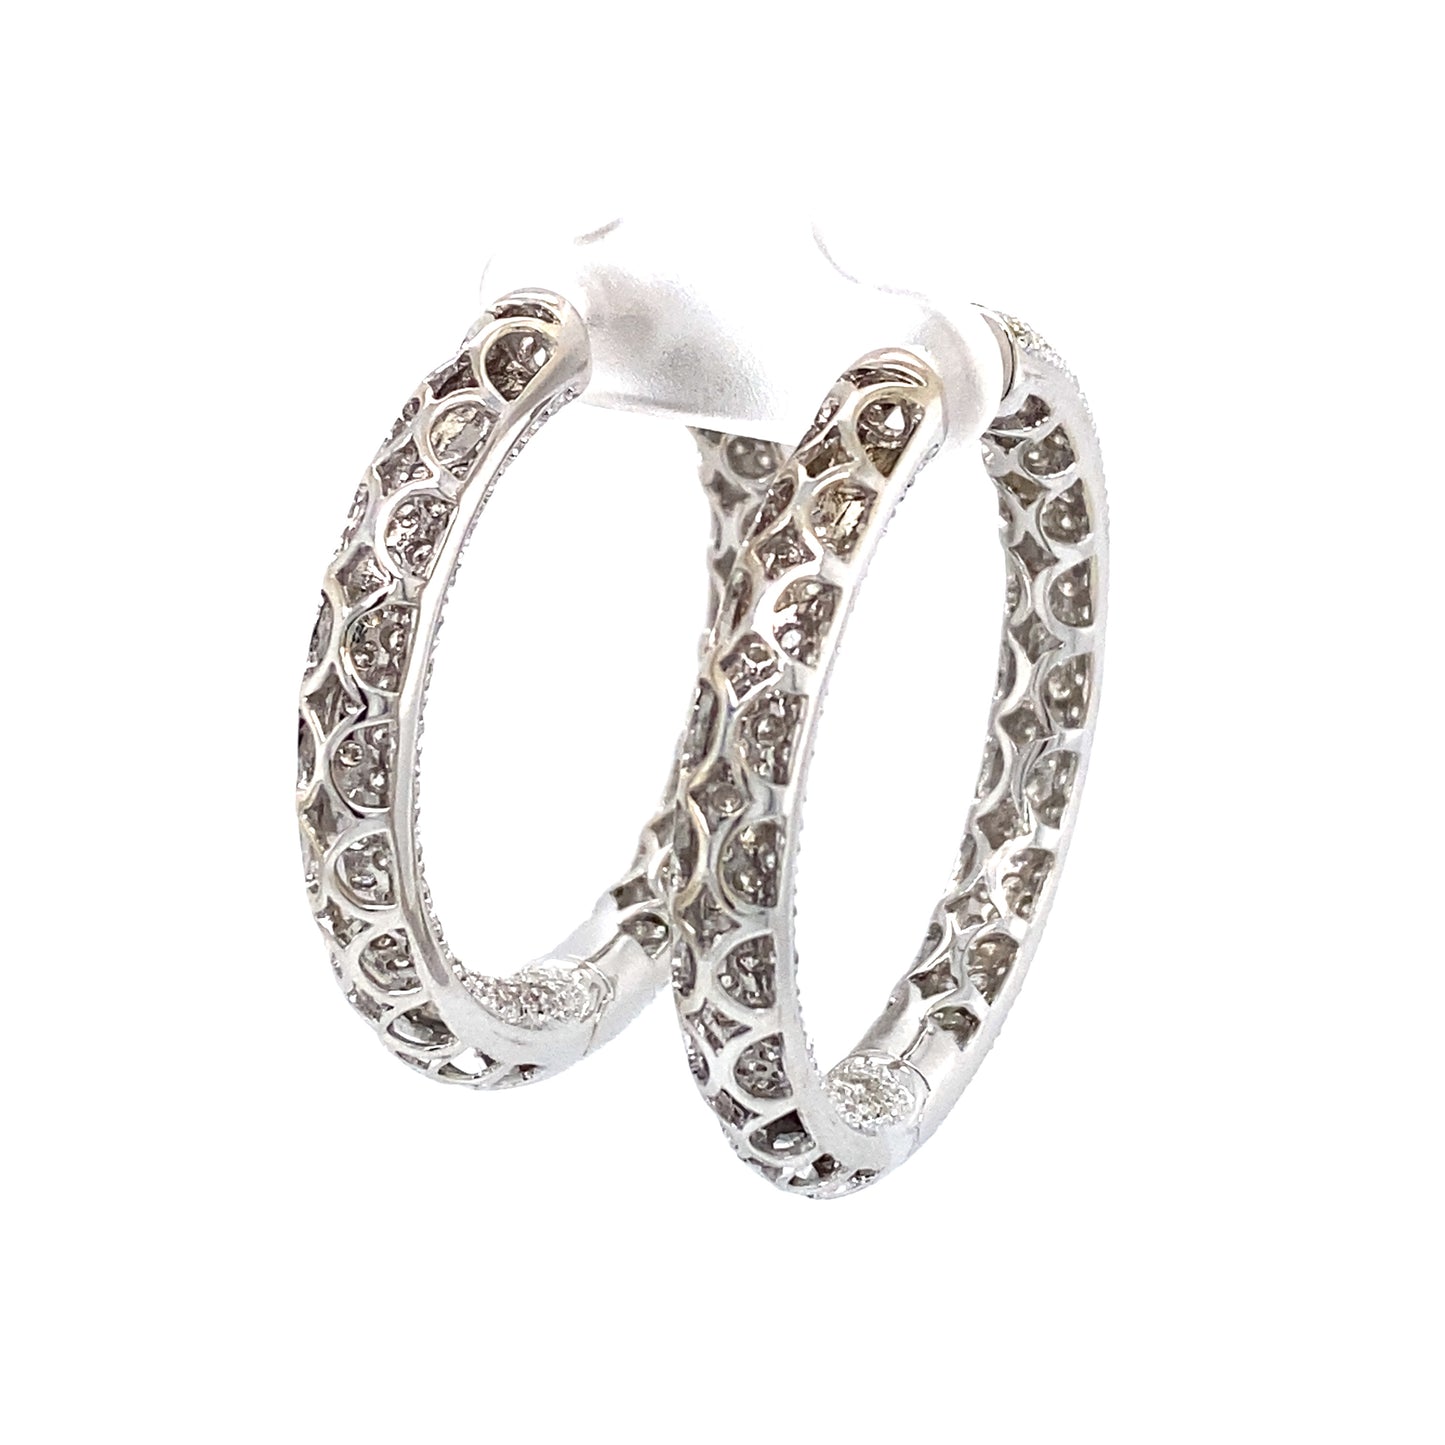 Circa 1990 Inside-Out Diamond Hoop Earrings in 18 Karat White Gold